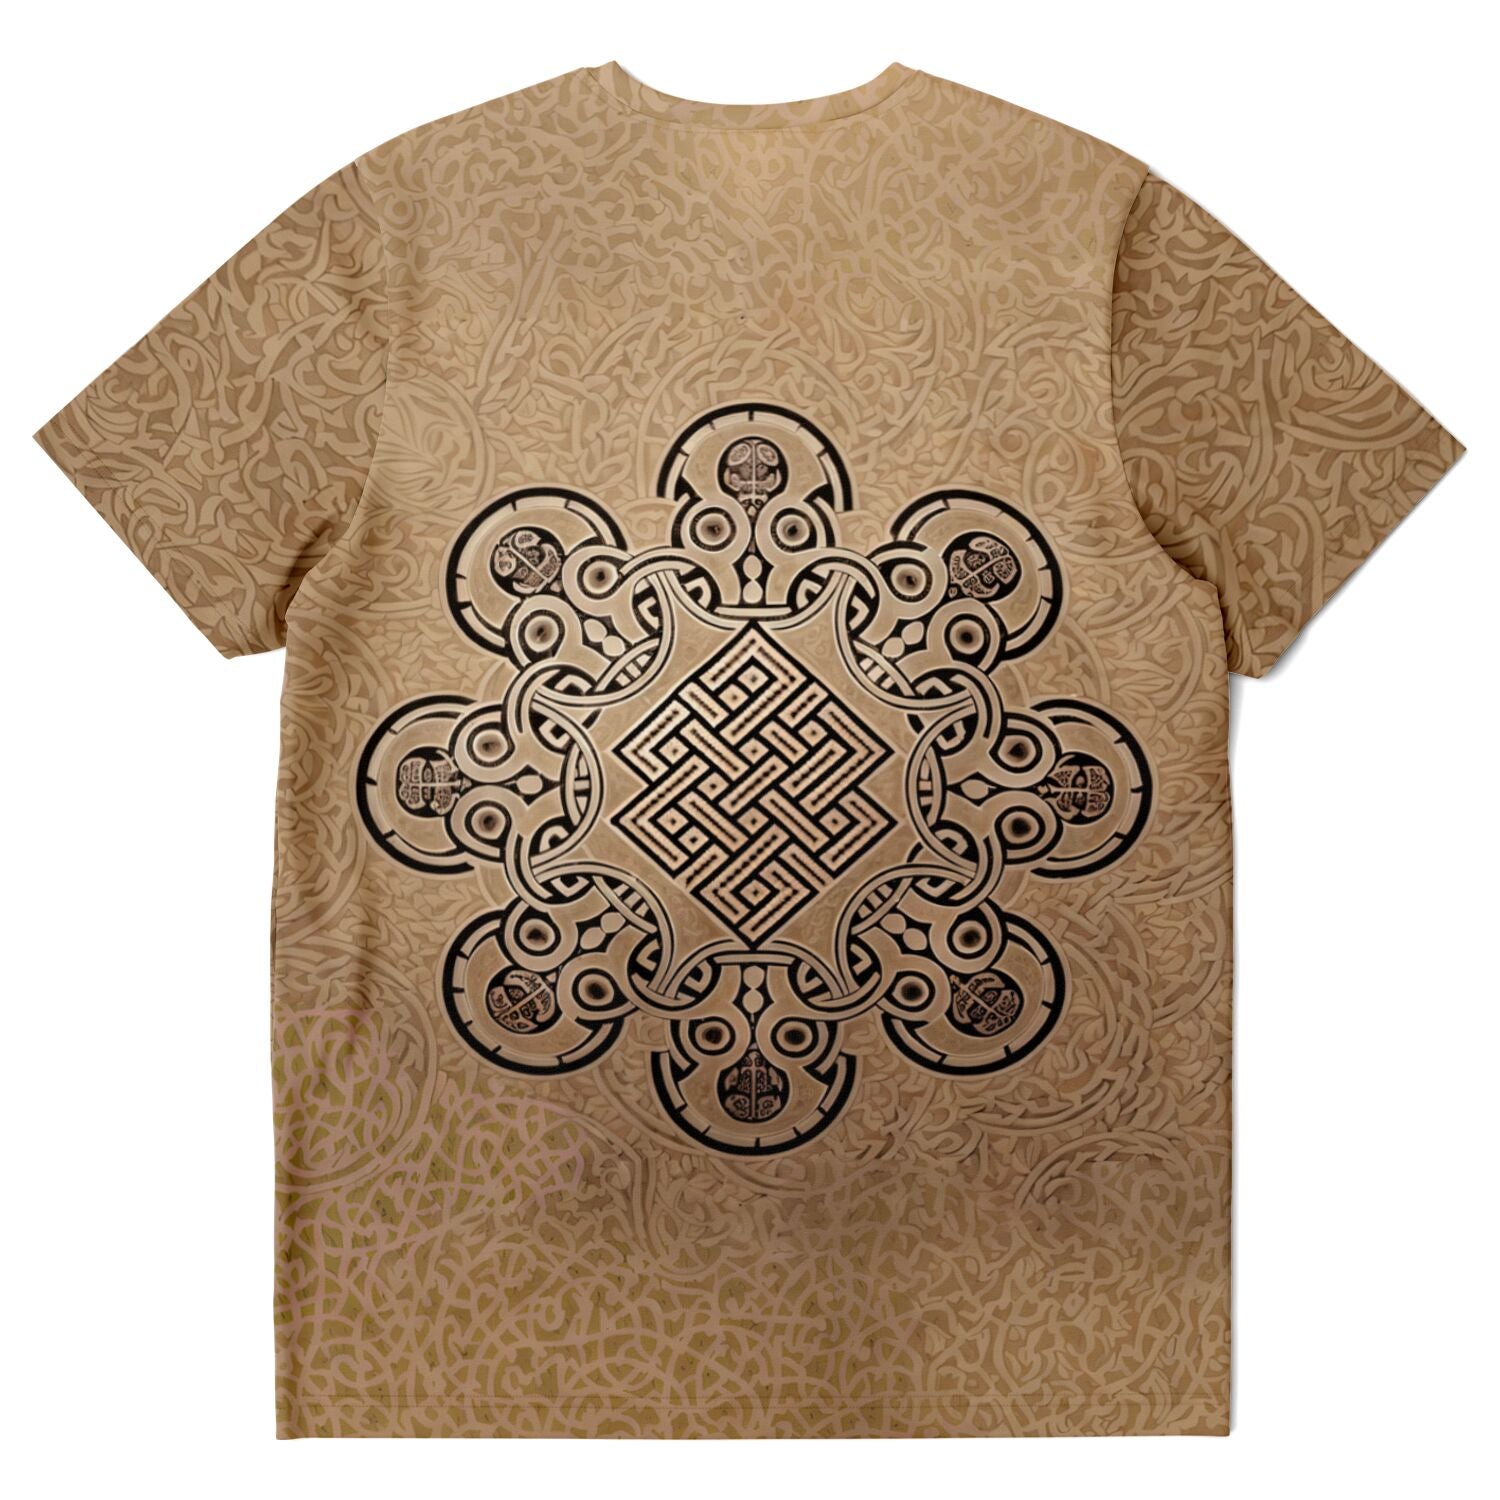 T-shirt XS Skull Sacred Geometry, Metatron's Cube | Zen Interbeing, Buddhist Eternal Knot Graphic Art T-Shirt